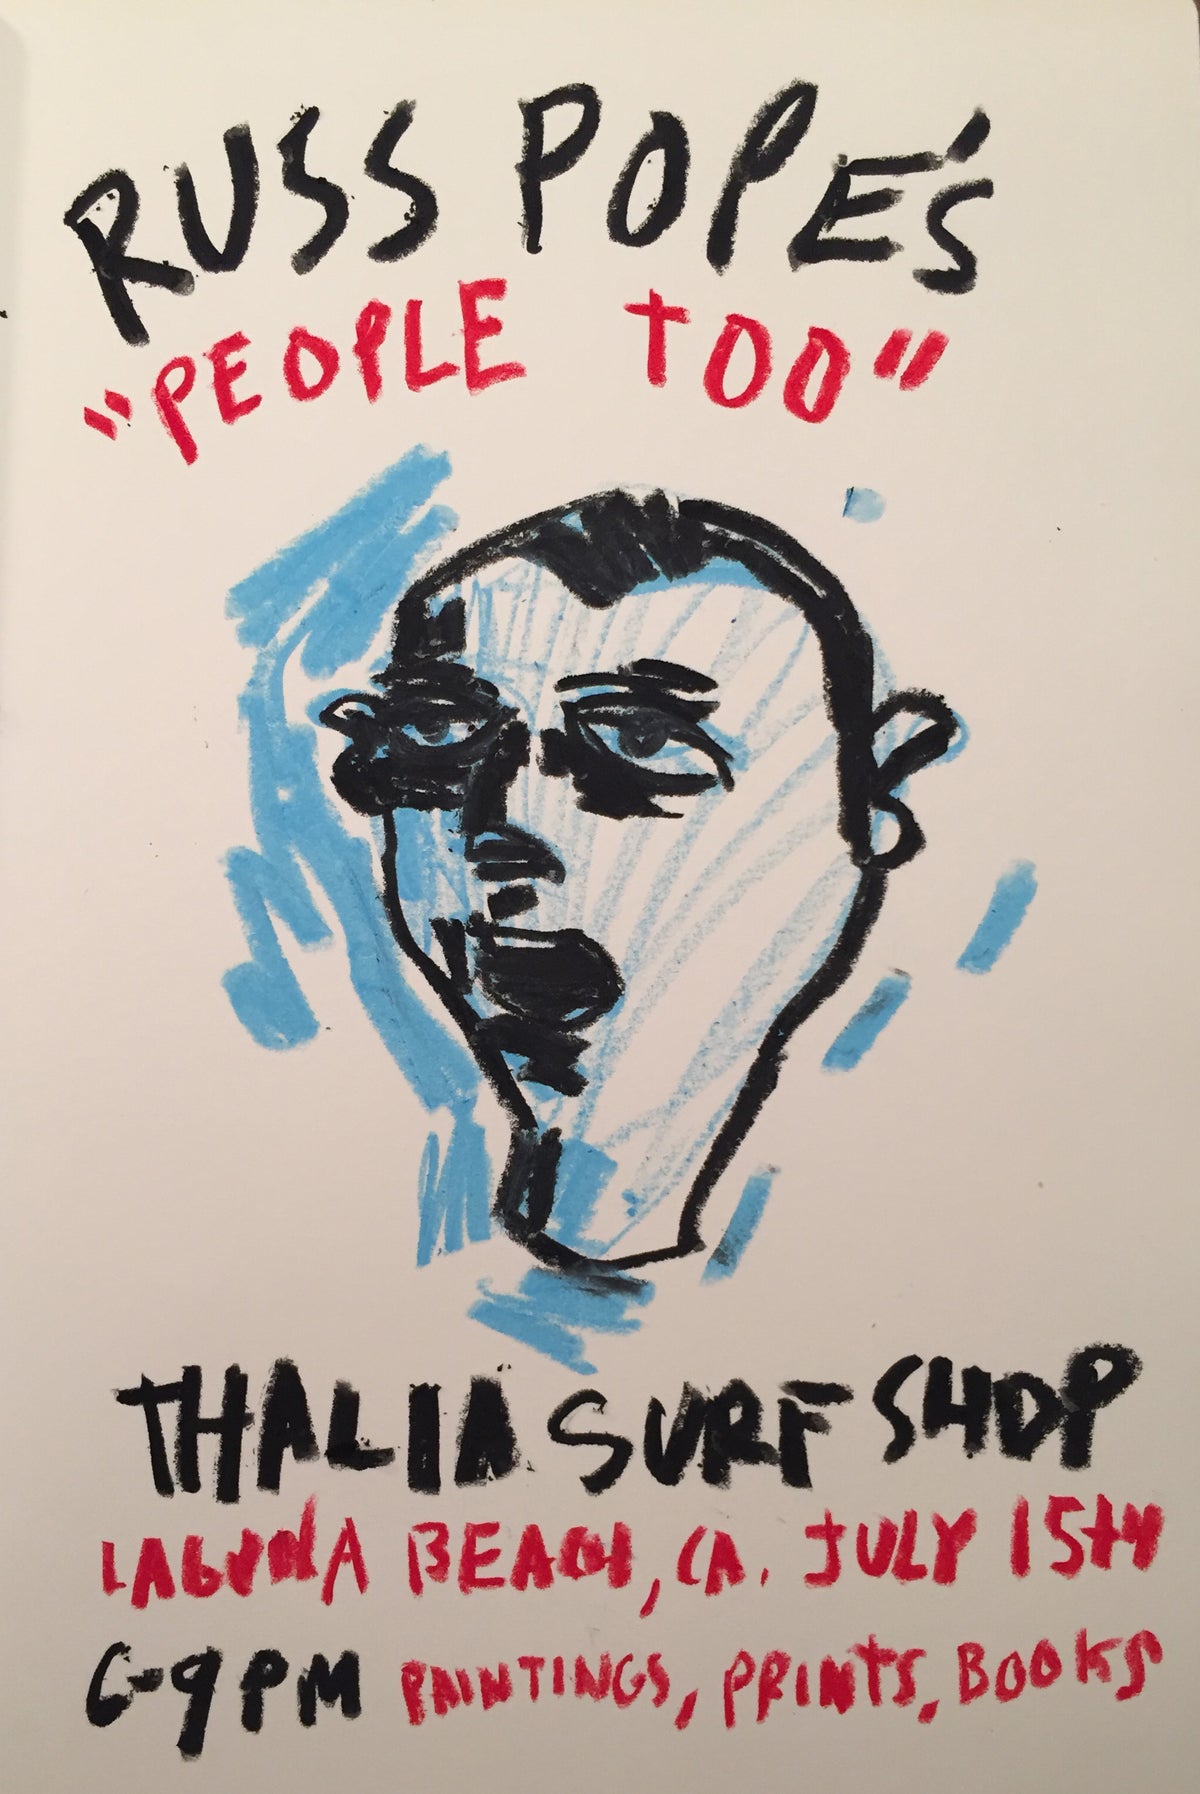 Russ Pope "People Too" Thalia Surf Shop 7.15.17